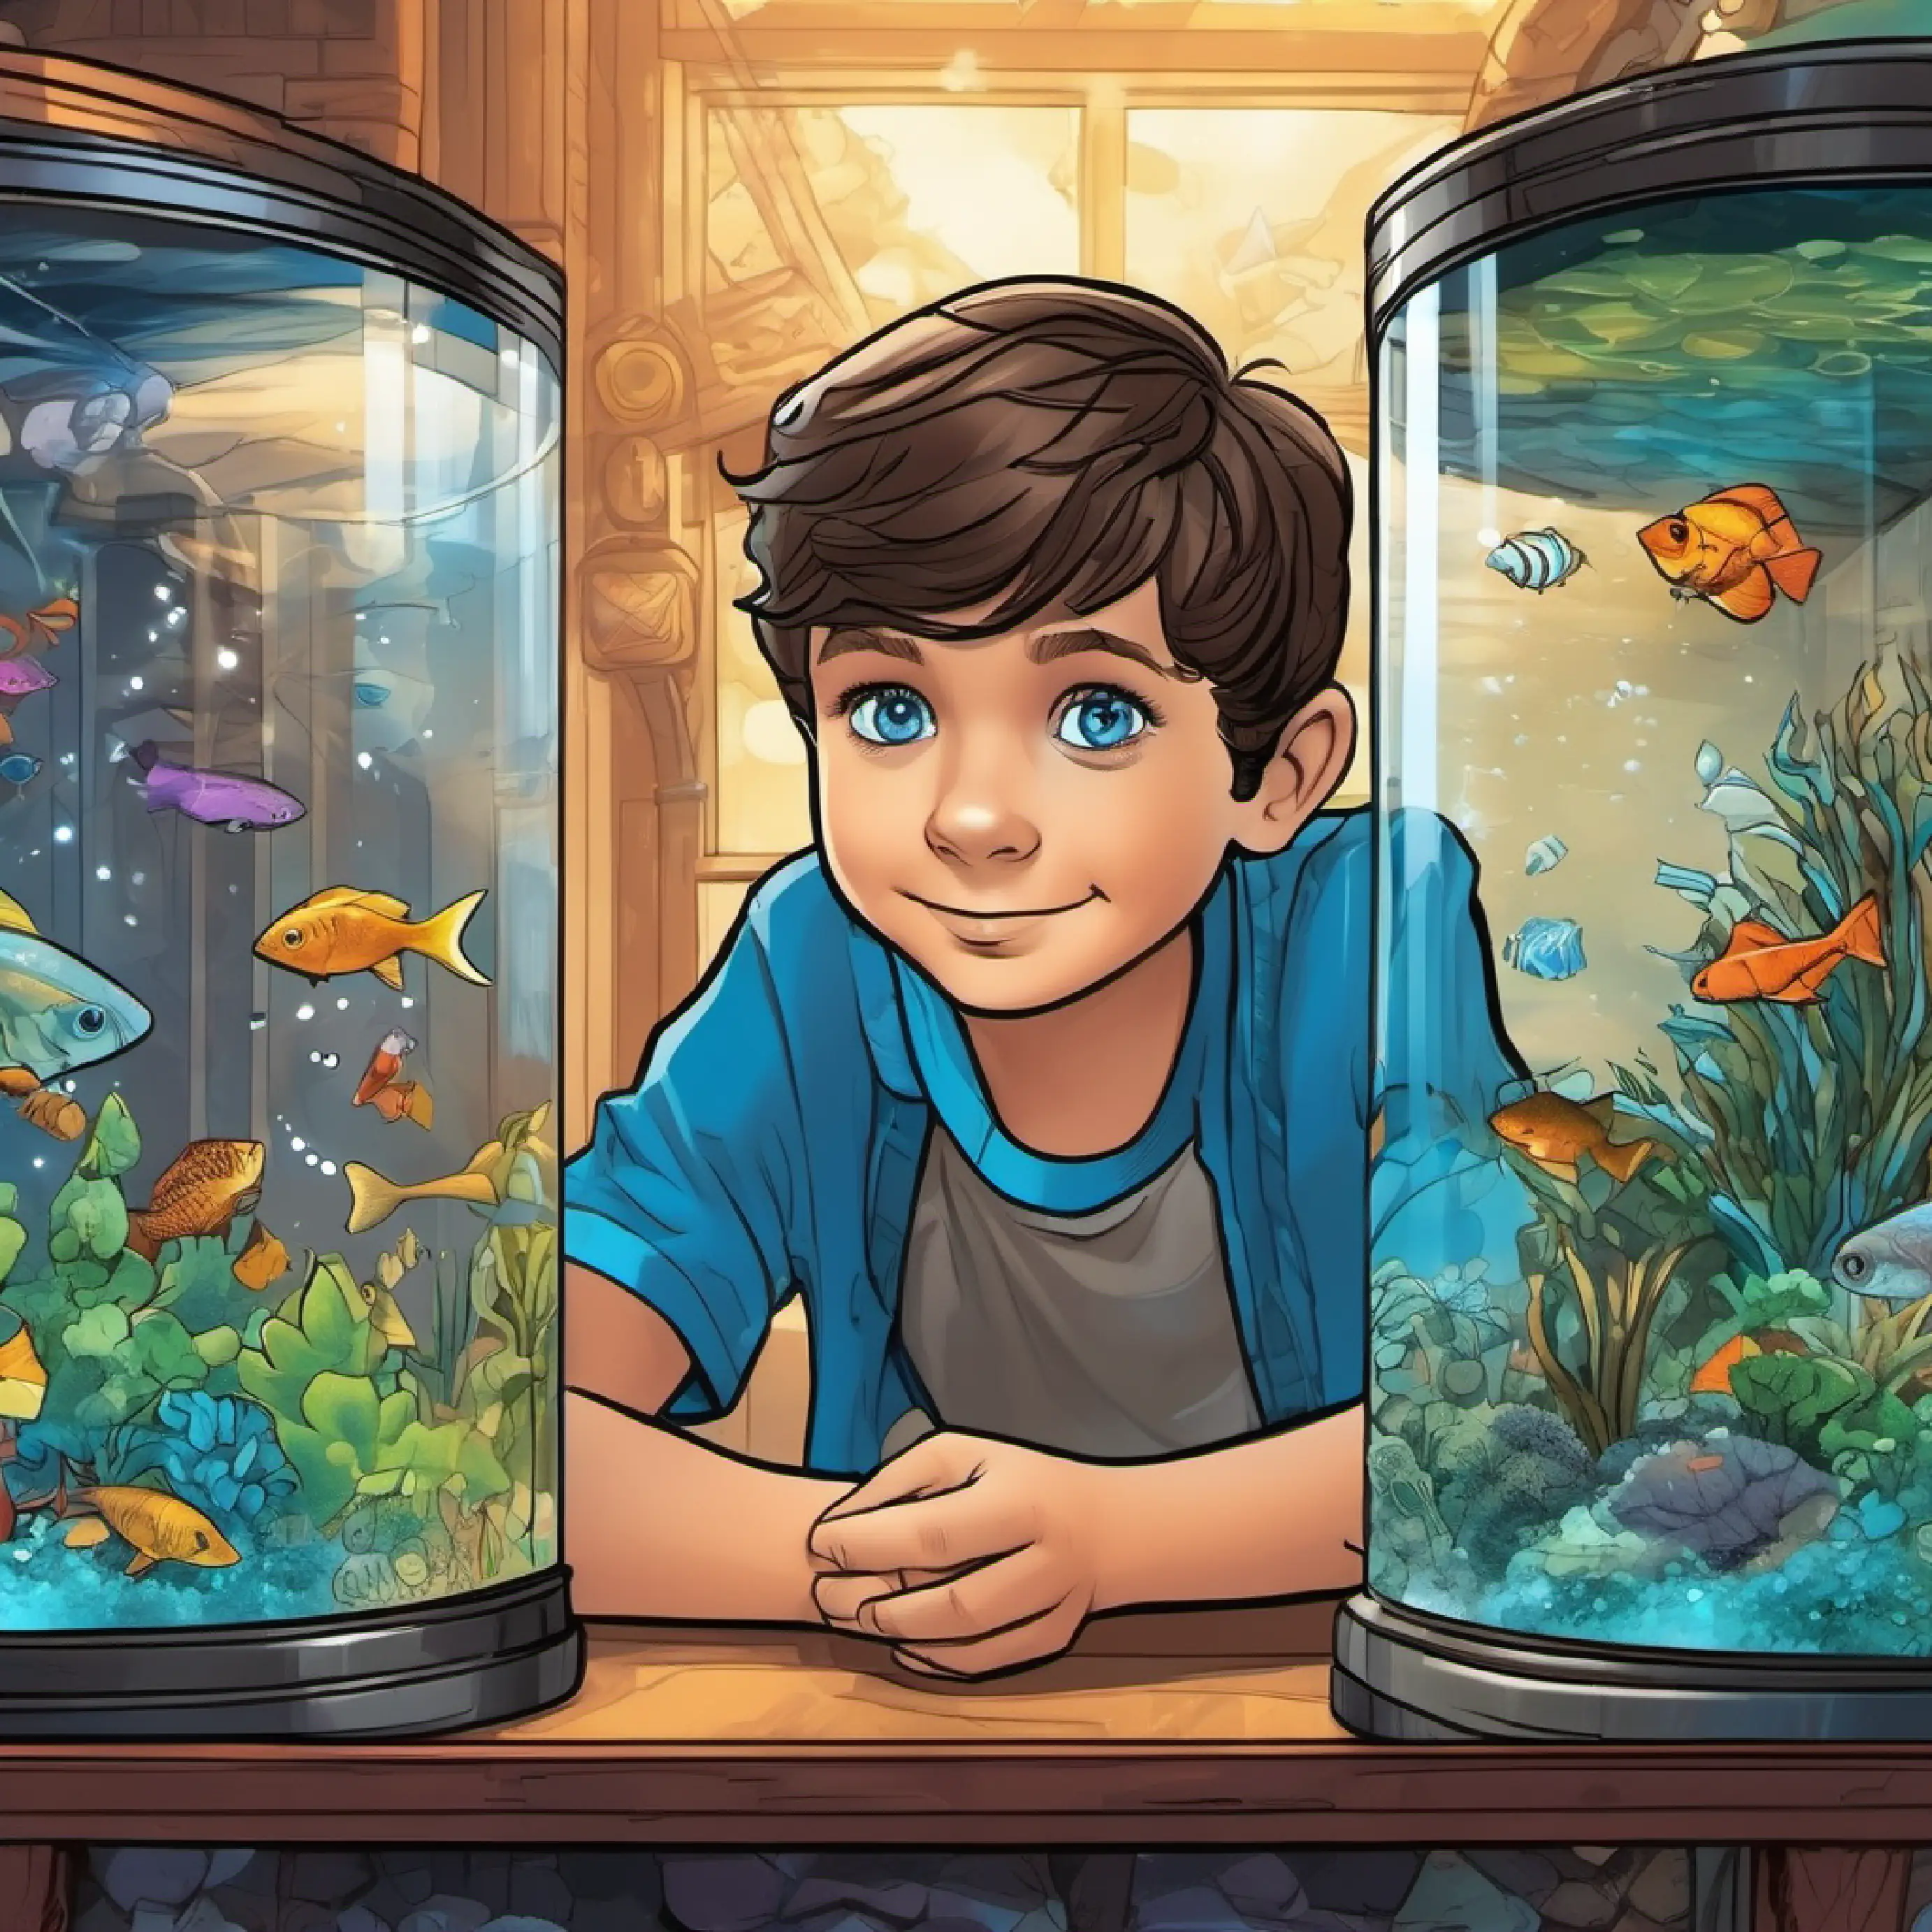 Hobbes is miniaturized inside his magical aquarium, beginning their quest.